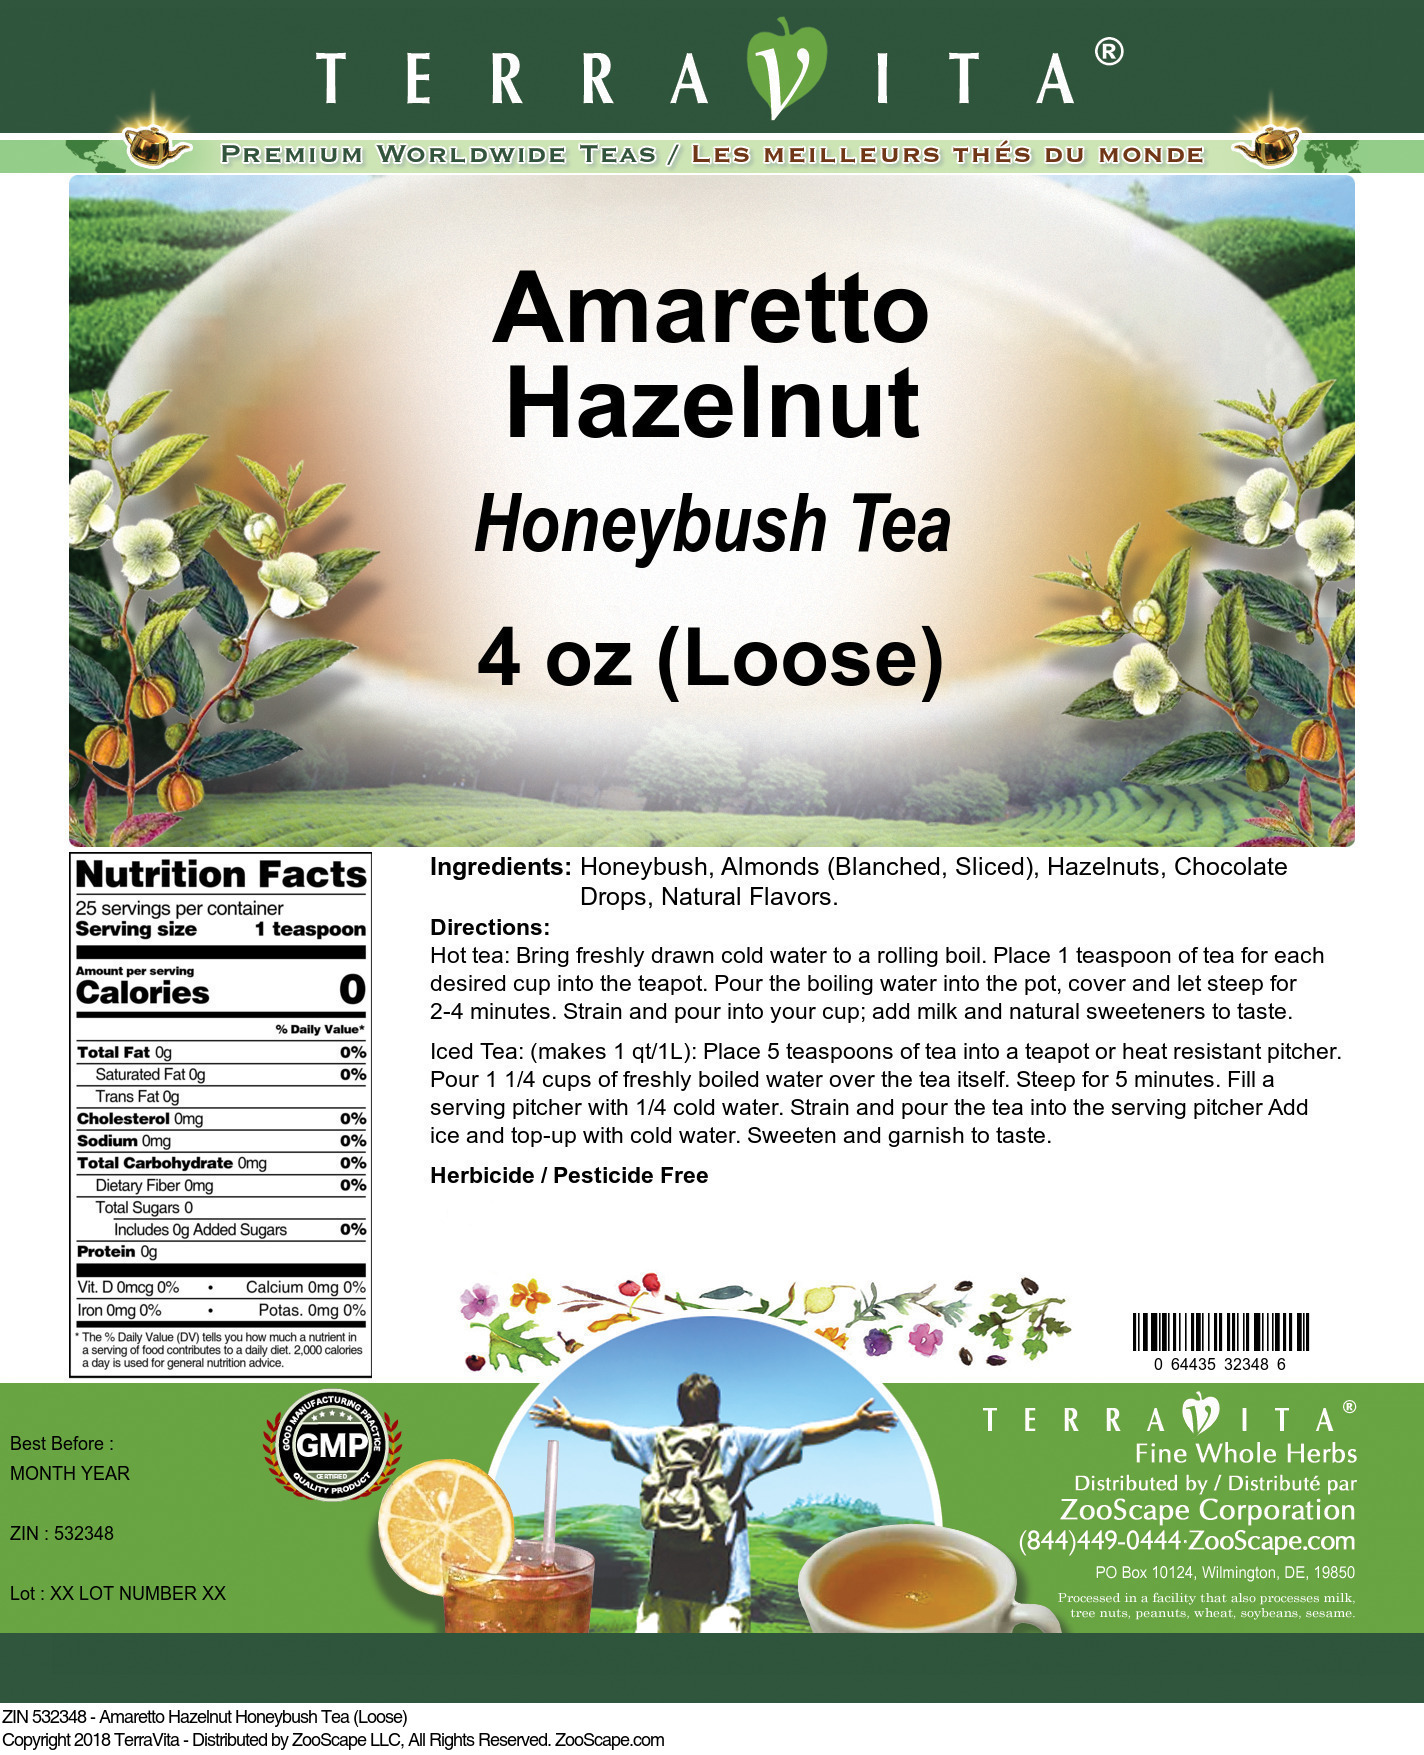 Amaretto Hazelnut Honeybush Tea (Loose) - Label